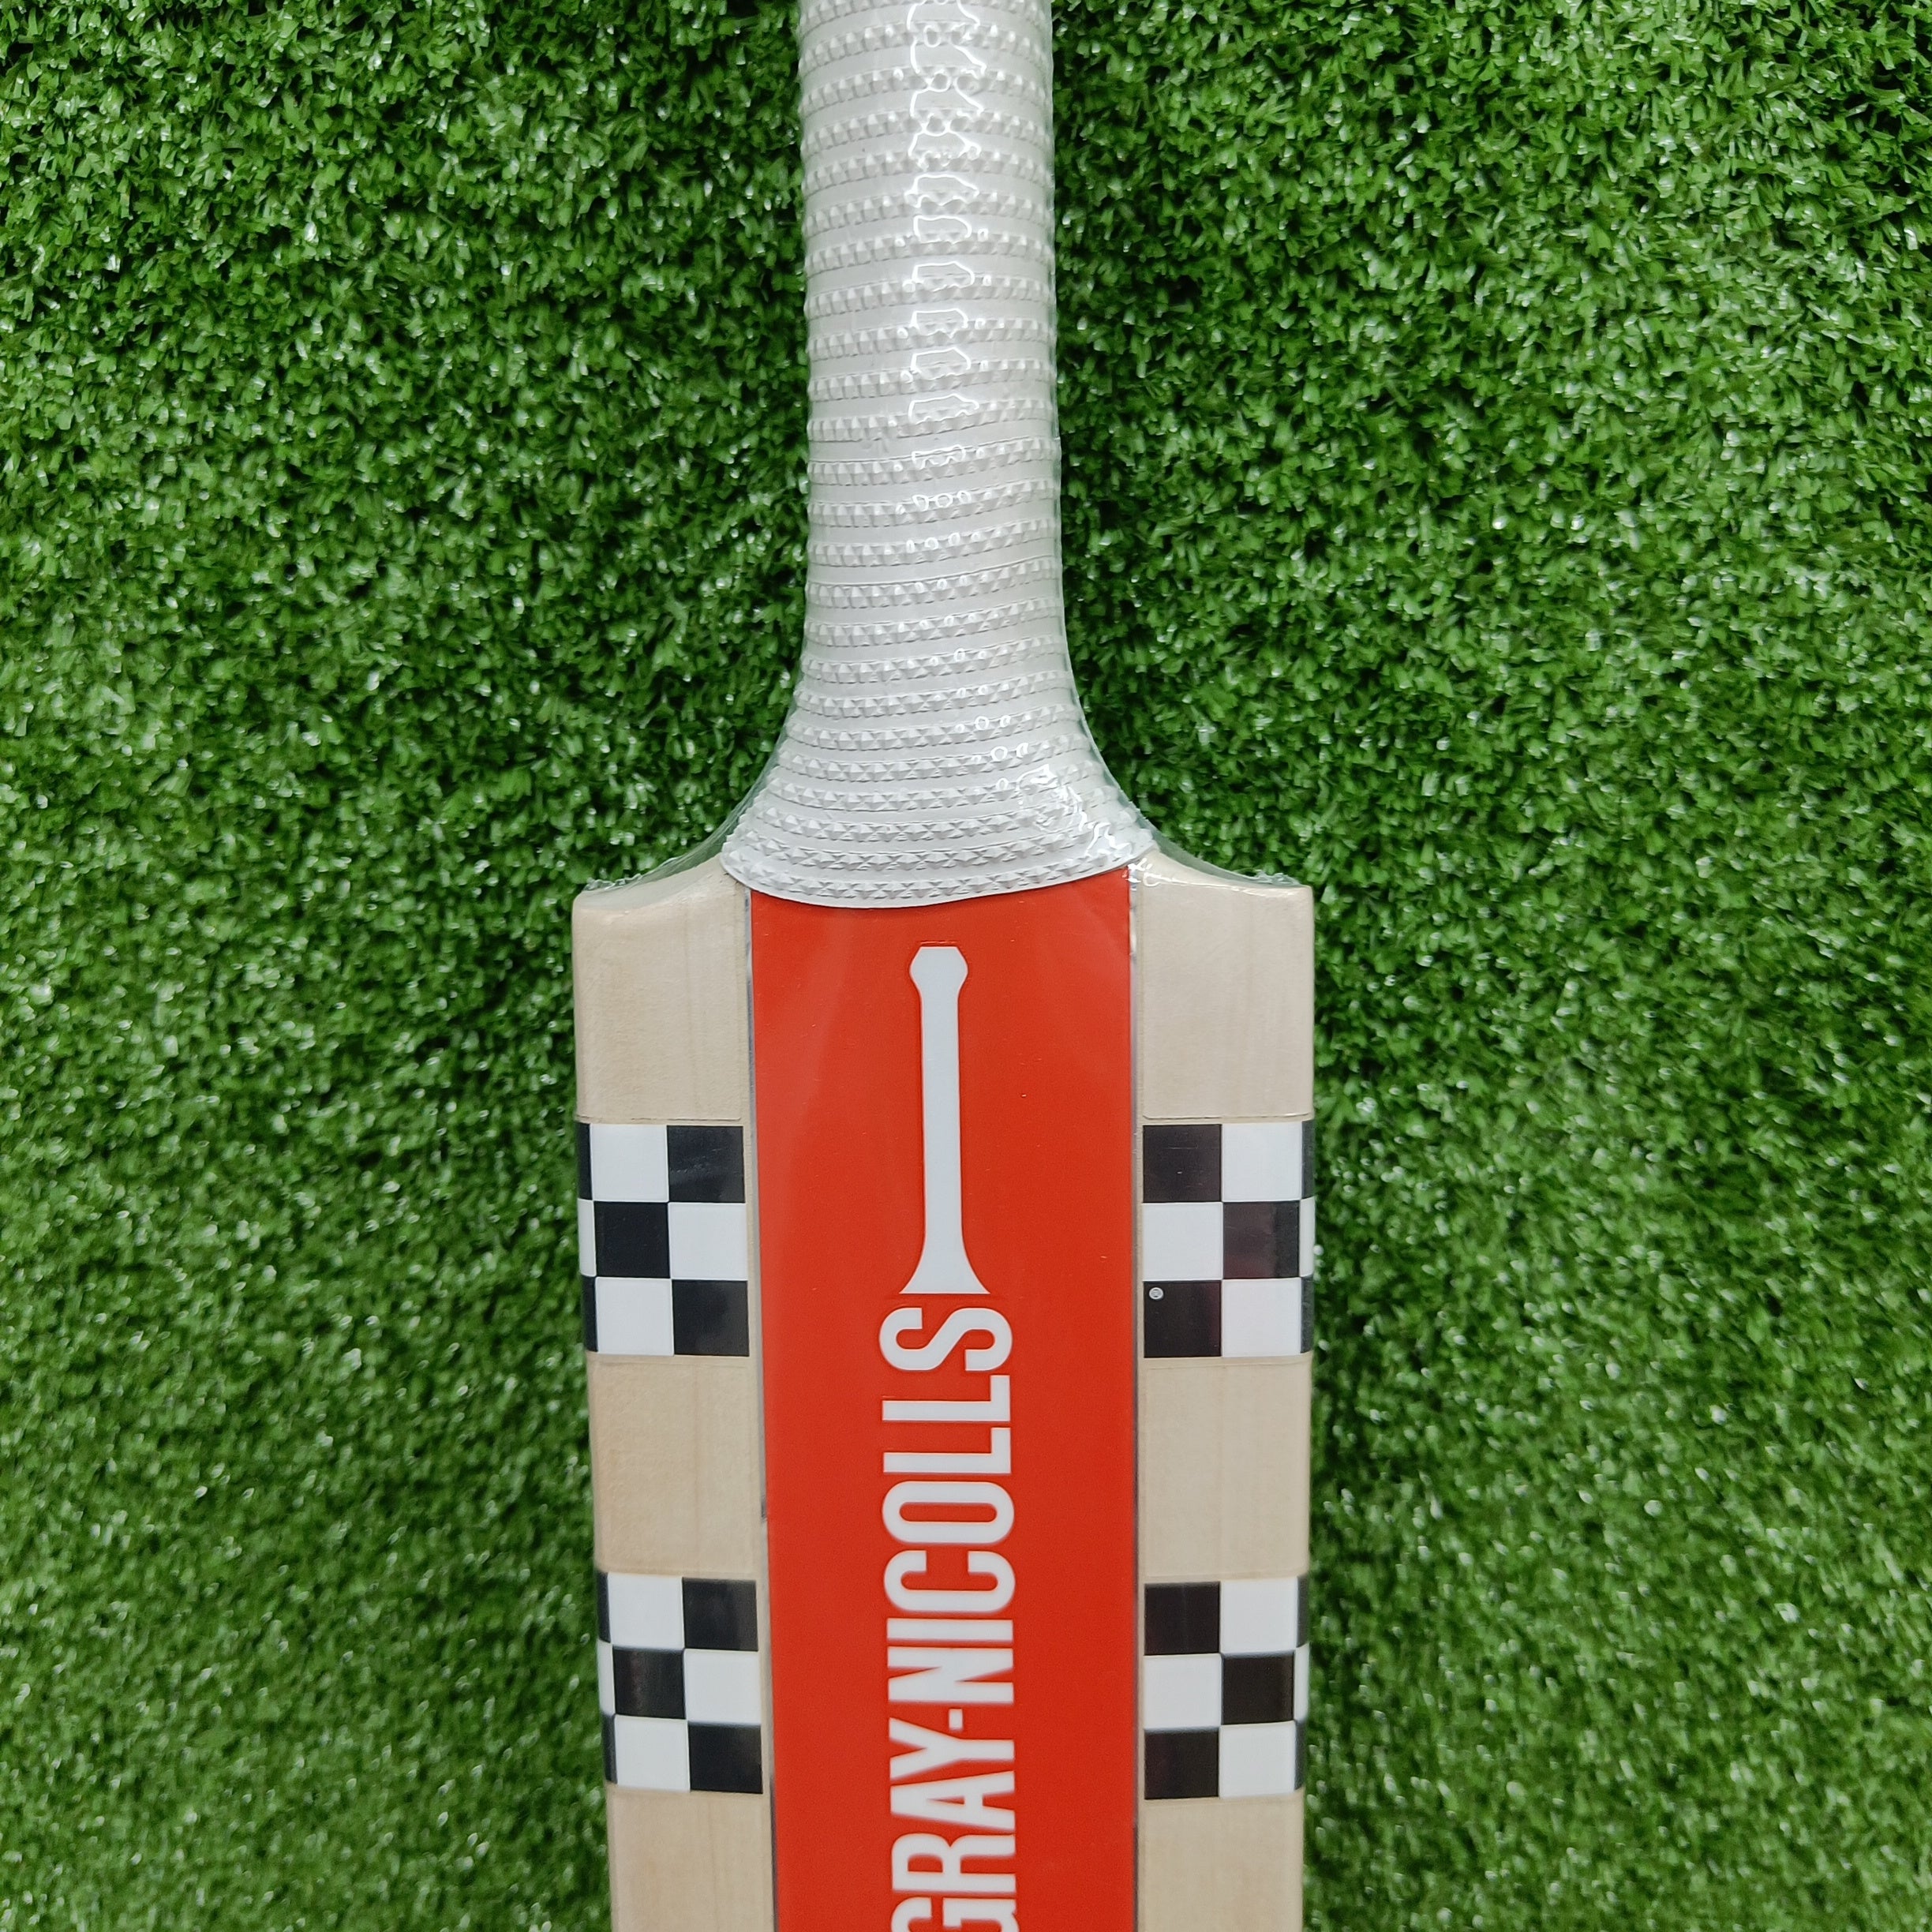 Gray-Nicolls Ultra Limited Edition Cricket Bat